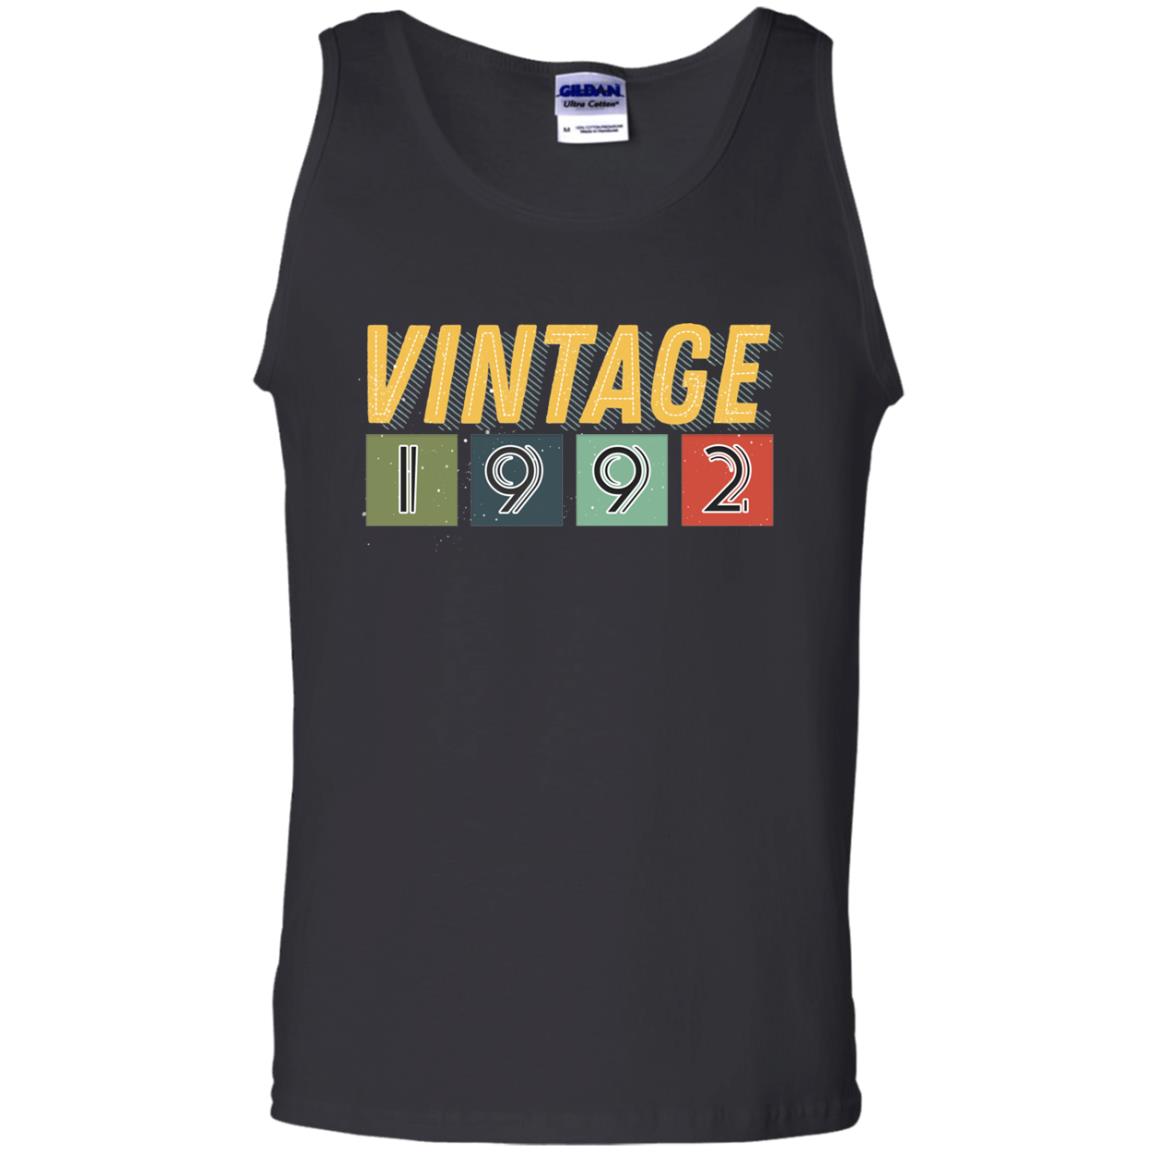 Vintage 1992 26th Birthday Gift Shirt For Mens Or WomensG220 Gildan 100% Cotton Tank Top